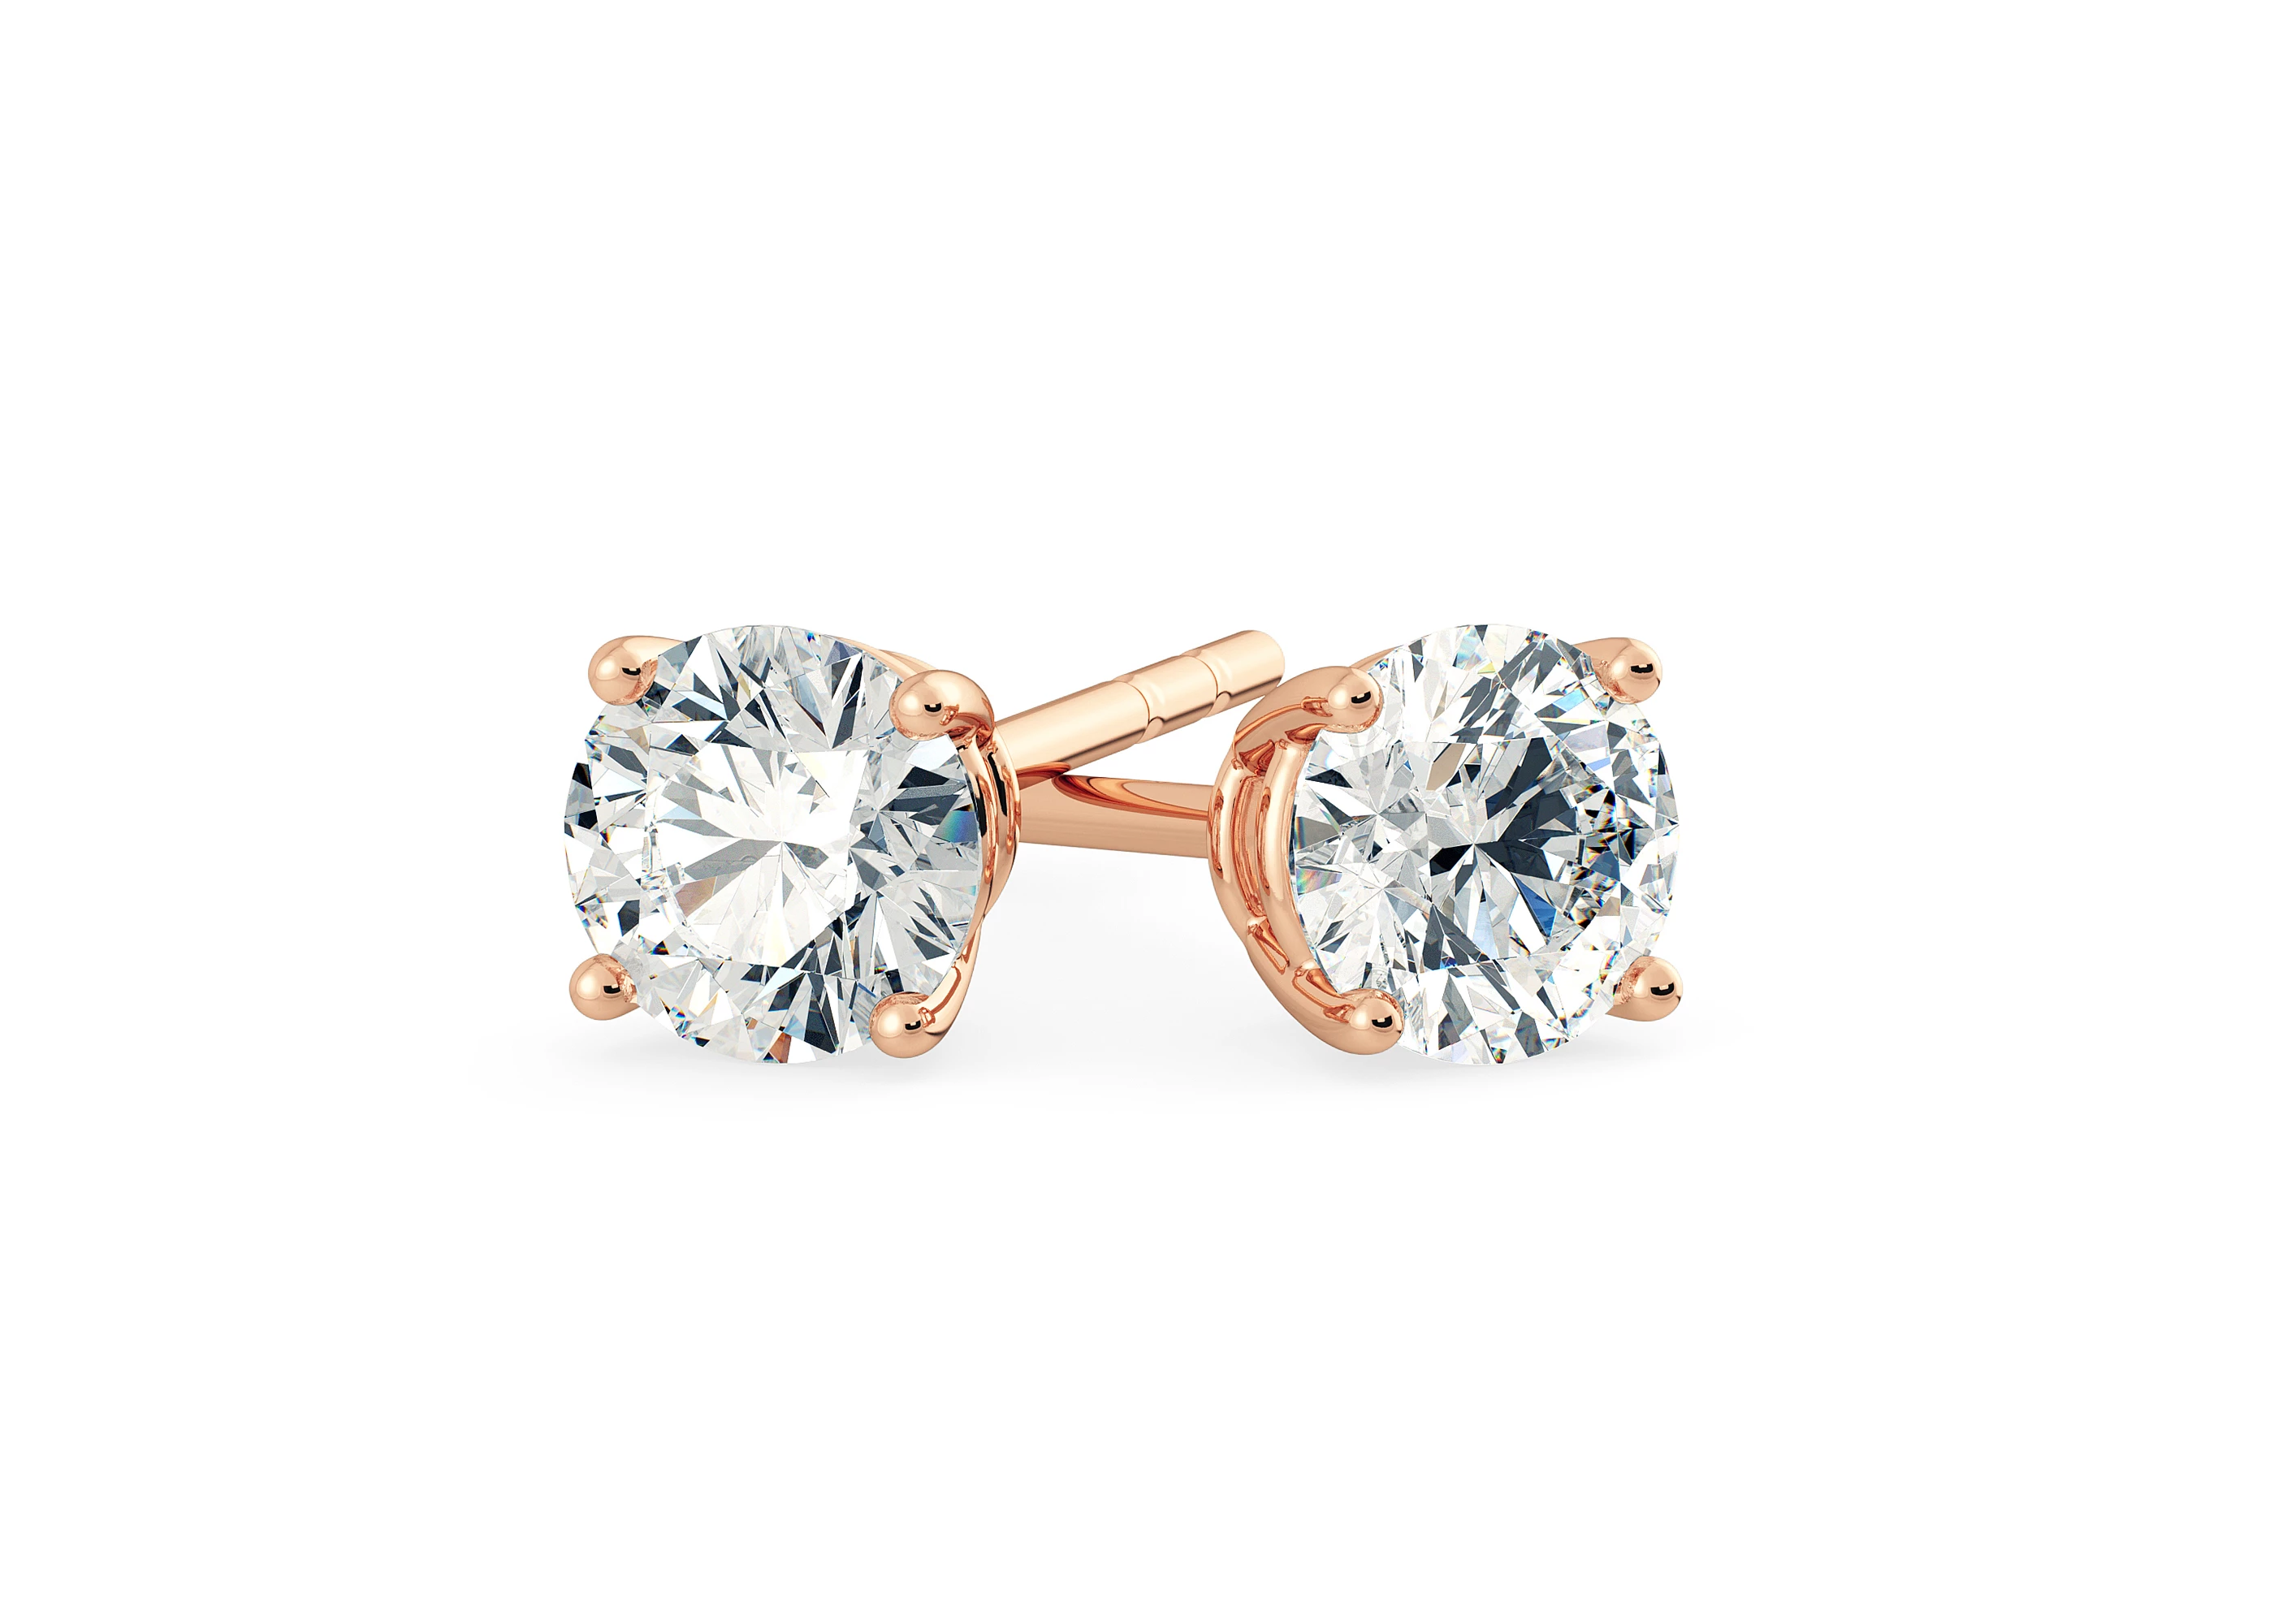 One Carat Round Brilliant Diamond Stud Earrings in 18K Rose Gold